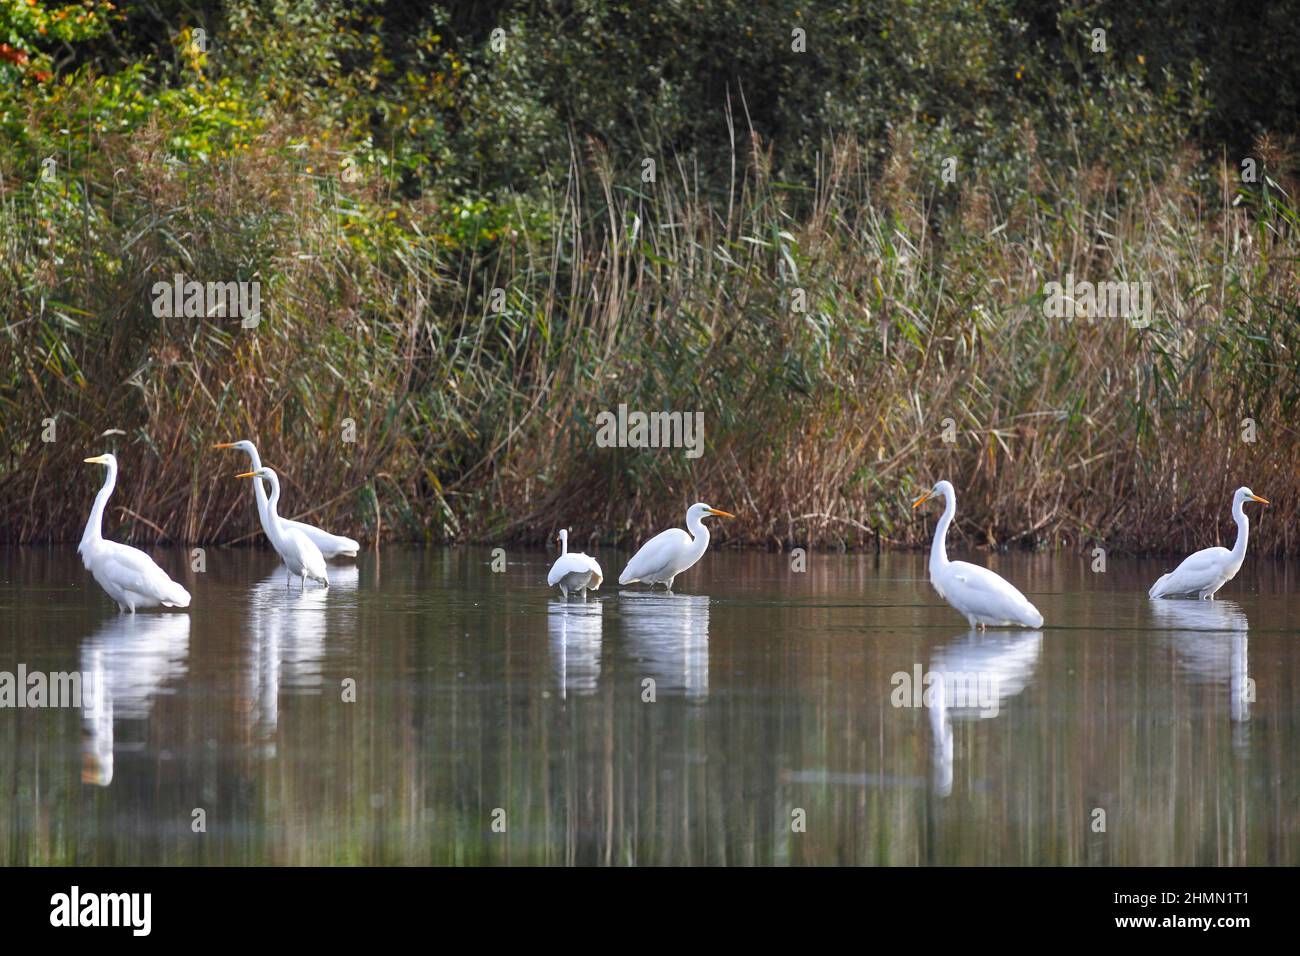 great egret, Great White Egret (Egretta alba, Casmerodius albus, Ardea alba), group in shallow water, Germany Stock Photo